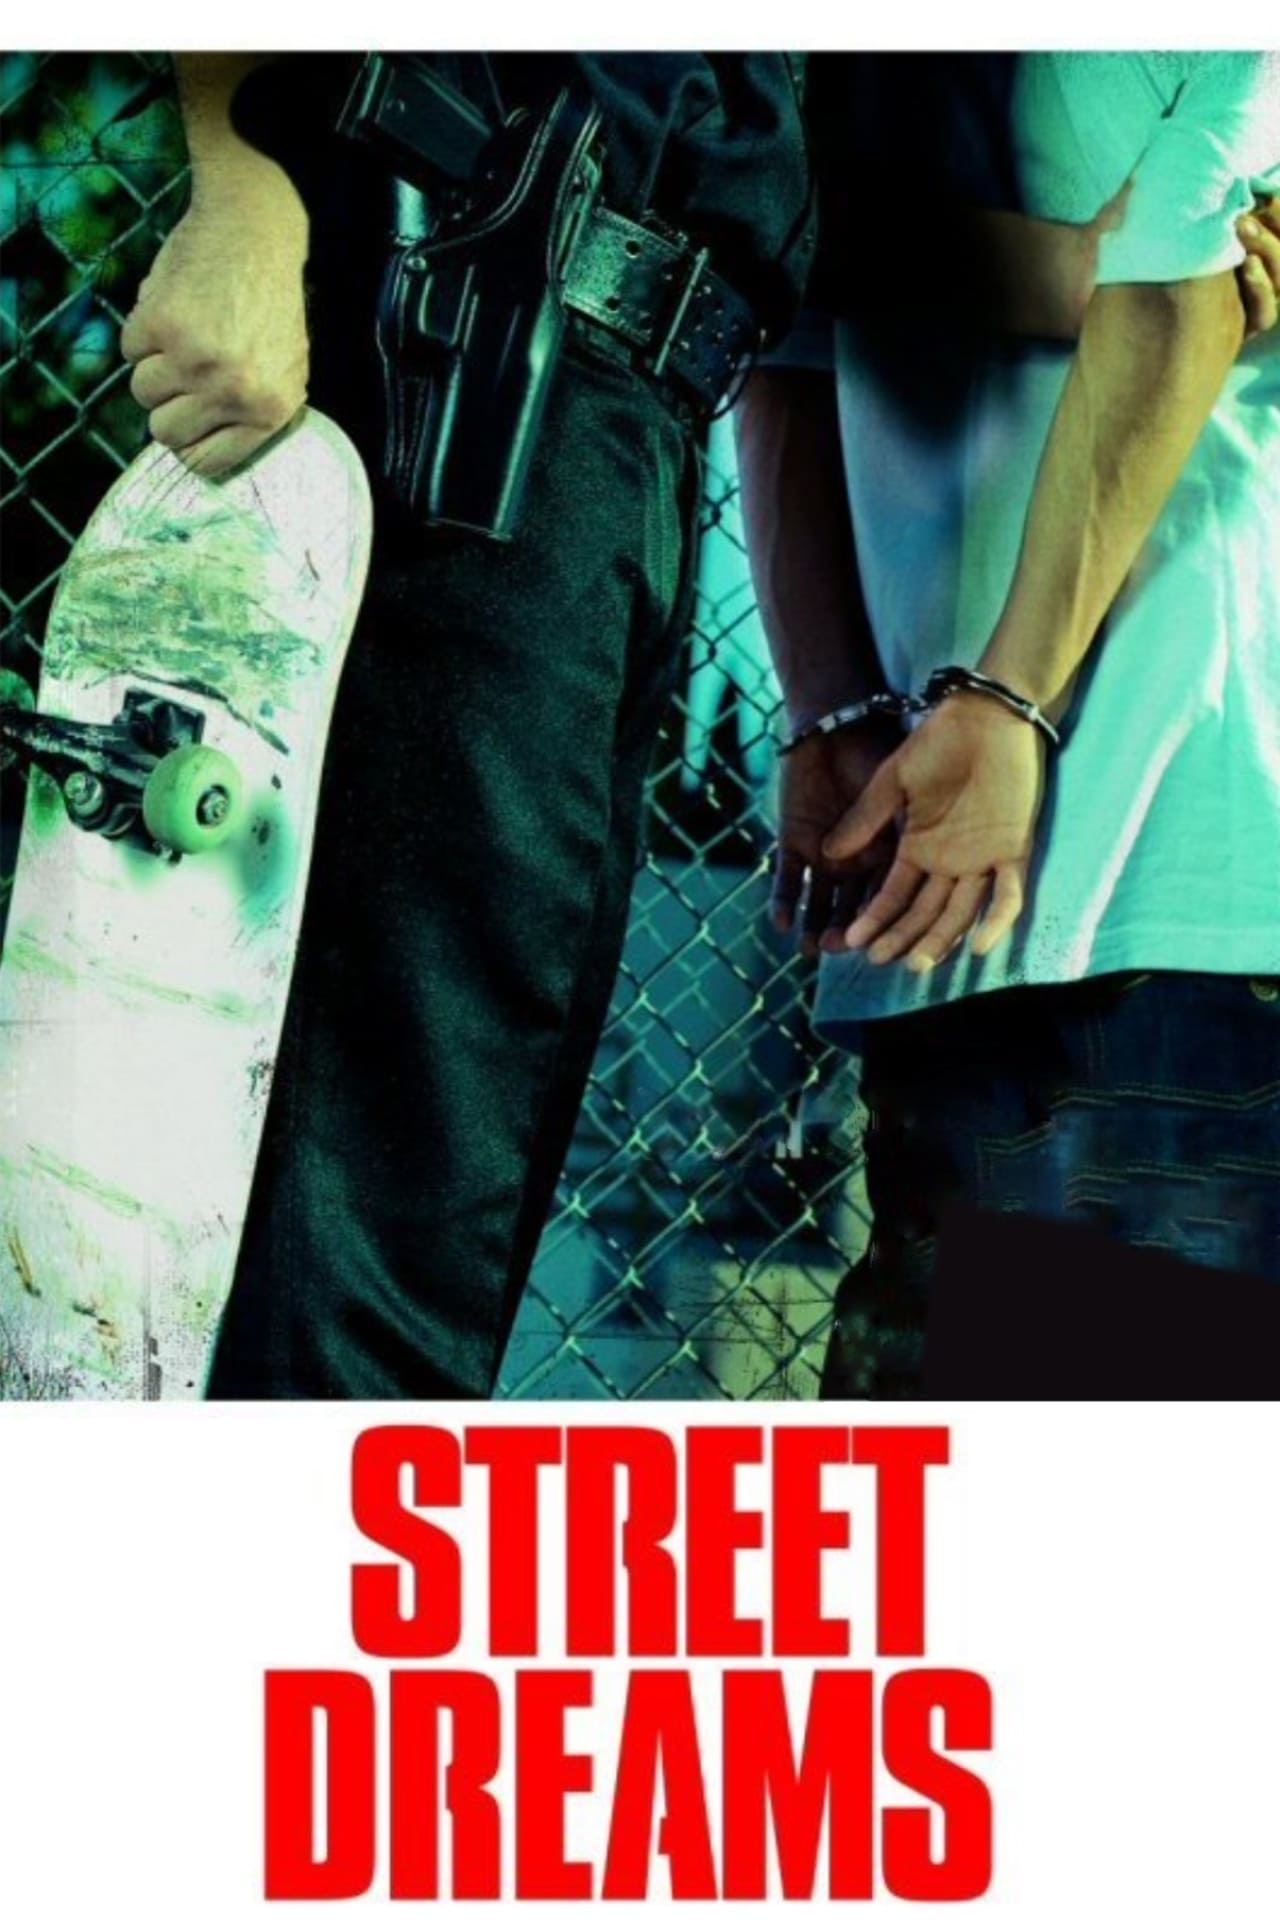 Street dreams на русском. Уличные мечты 2009.